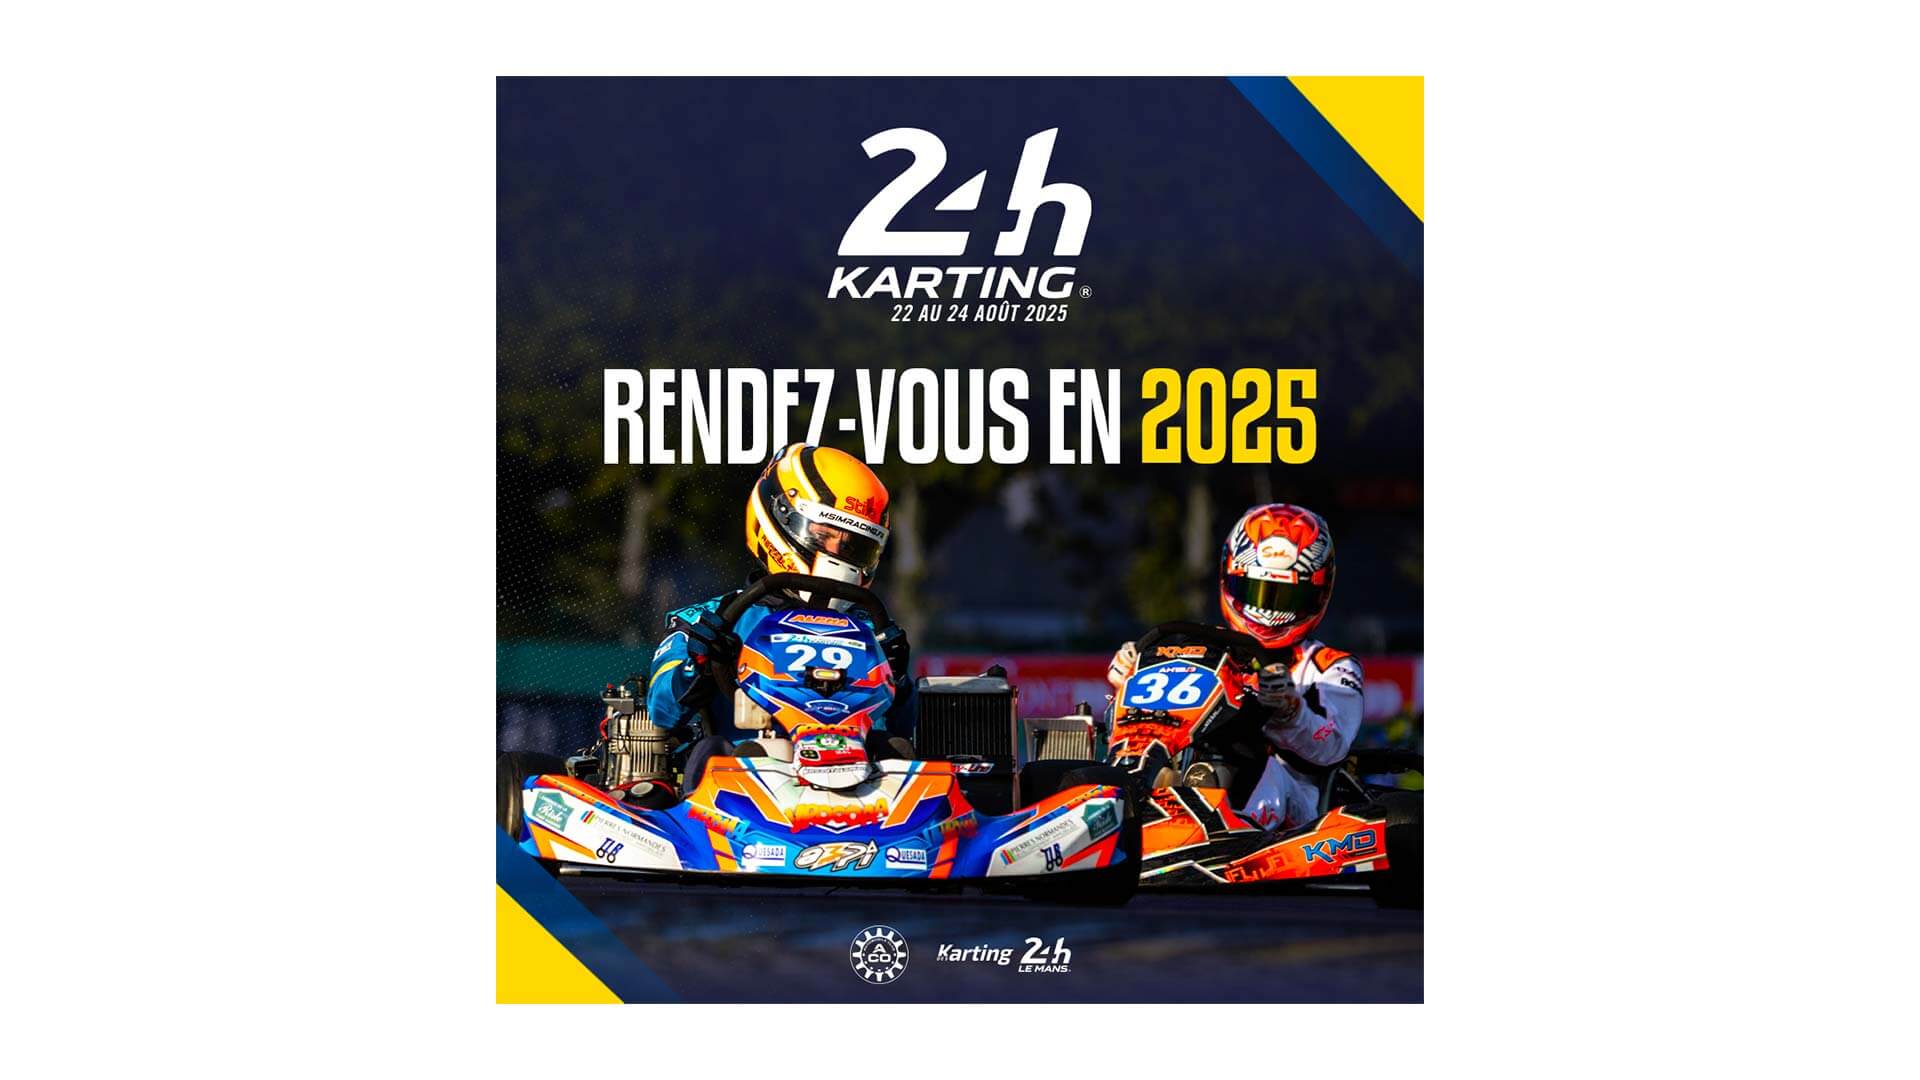 24h Karting - Rendez-vous en 2025